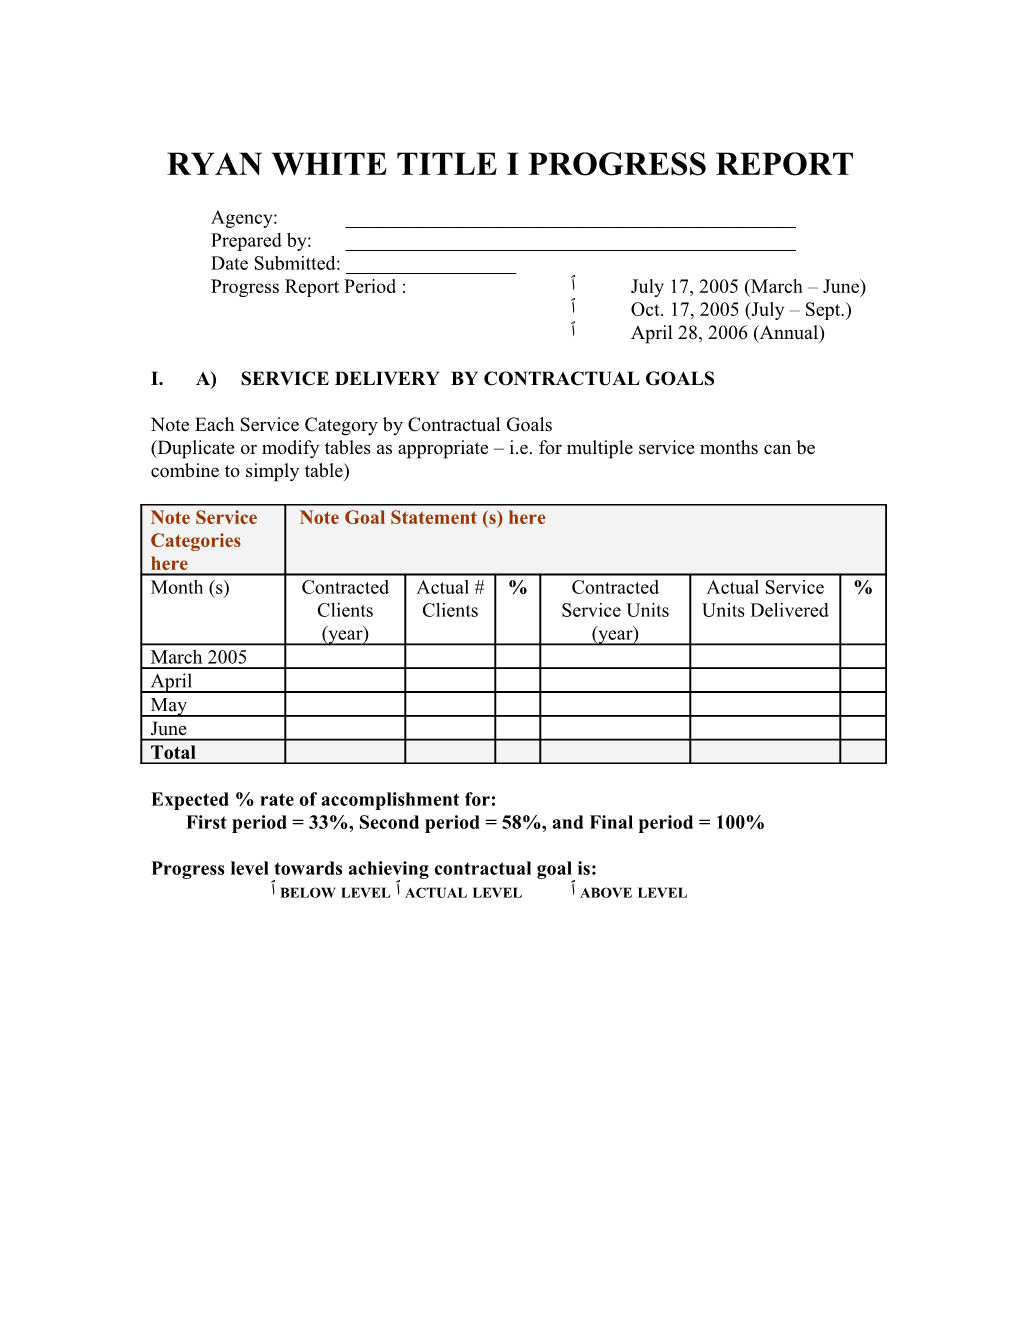 Ryan White Title I Progress Report